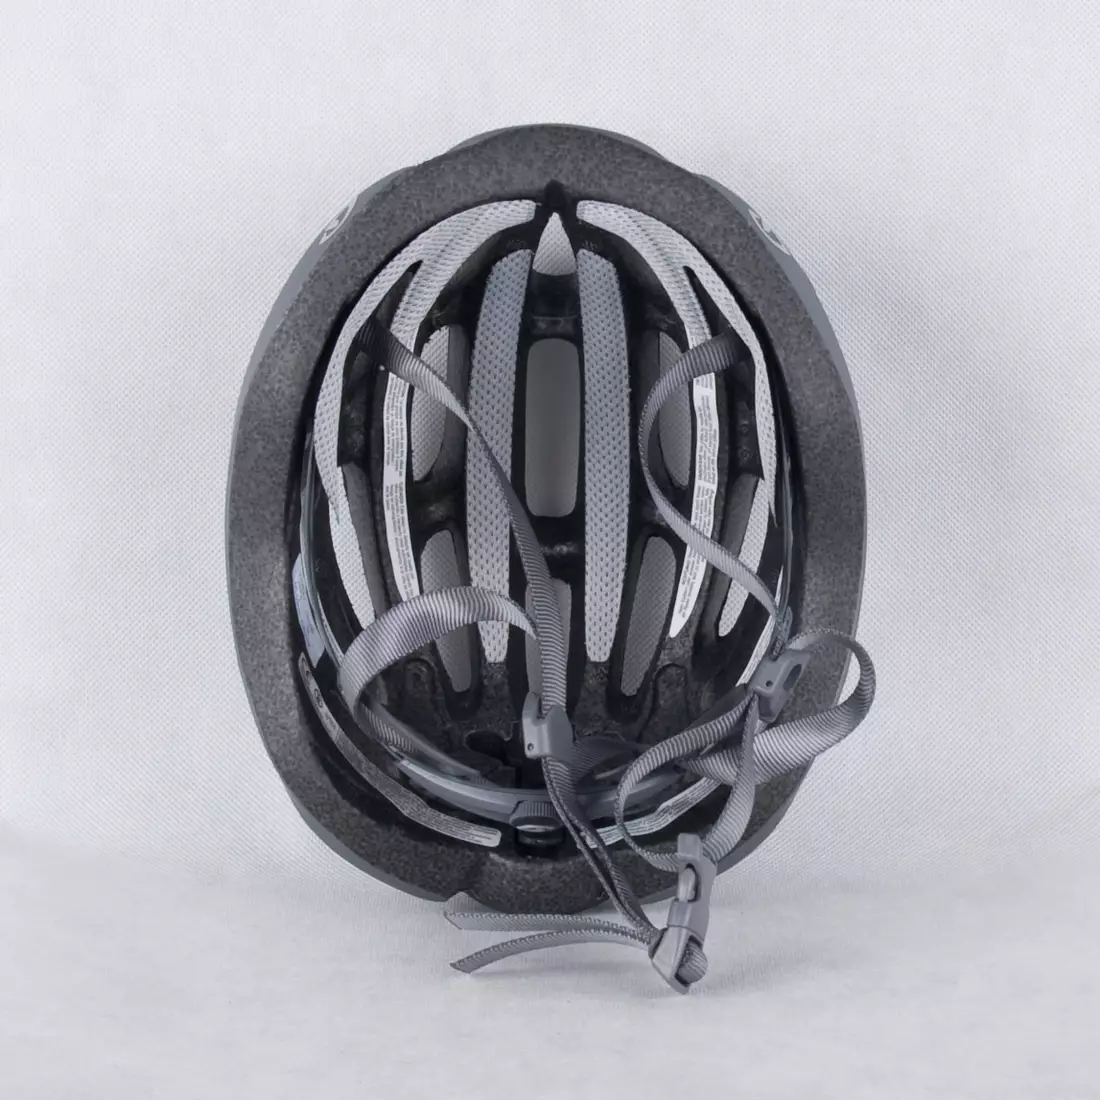 GIRO FORAY - titanium and white matte bicycle helmet